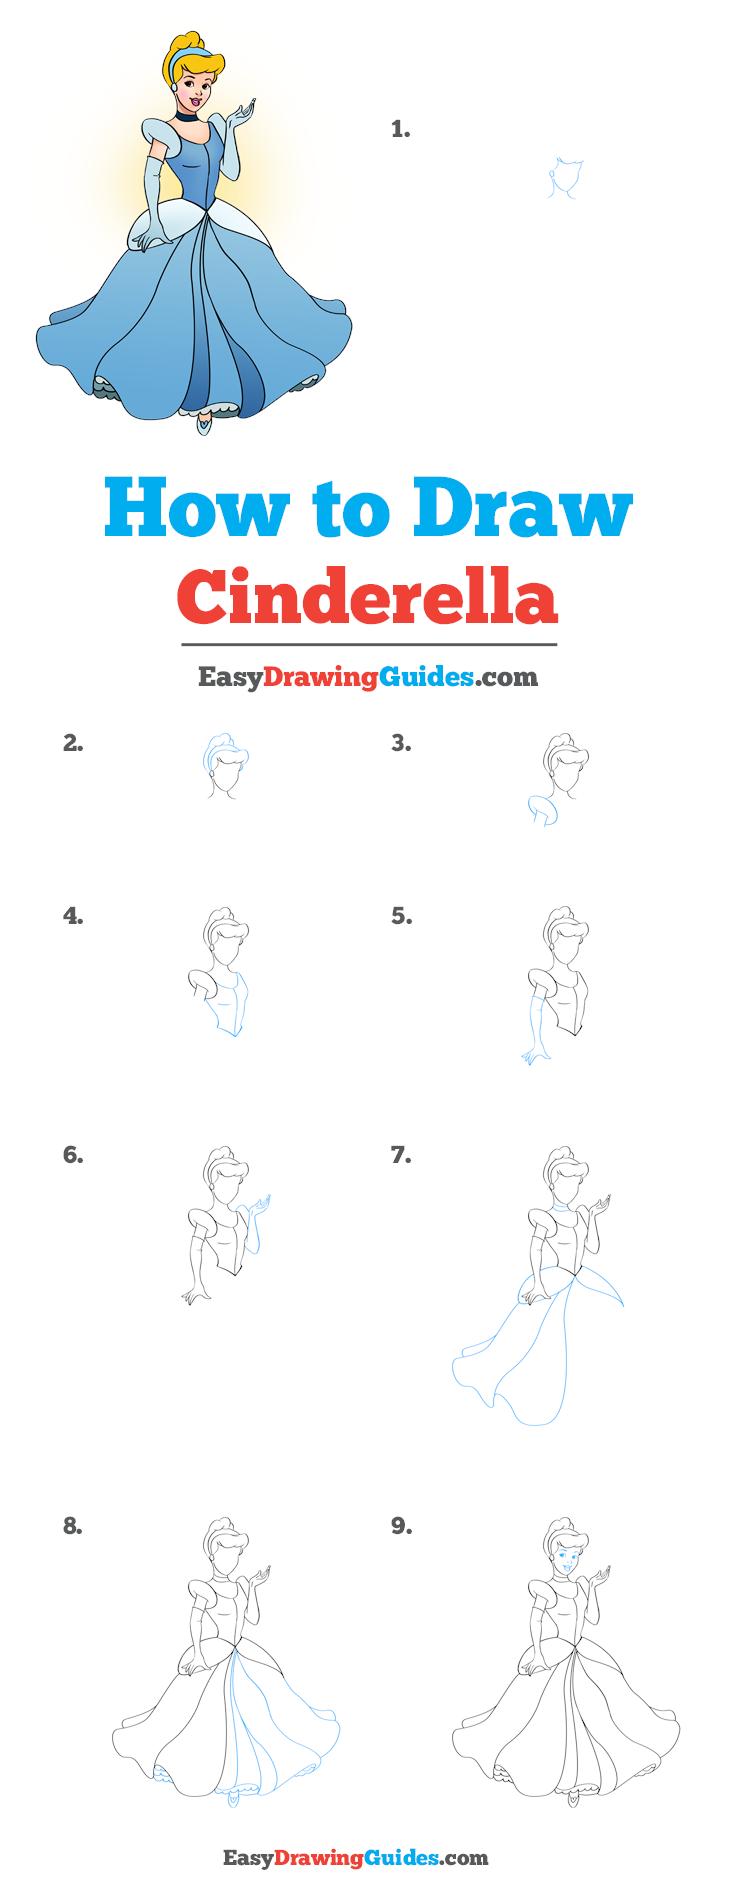 How to Draw Cinderella (Mini)